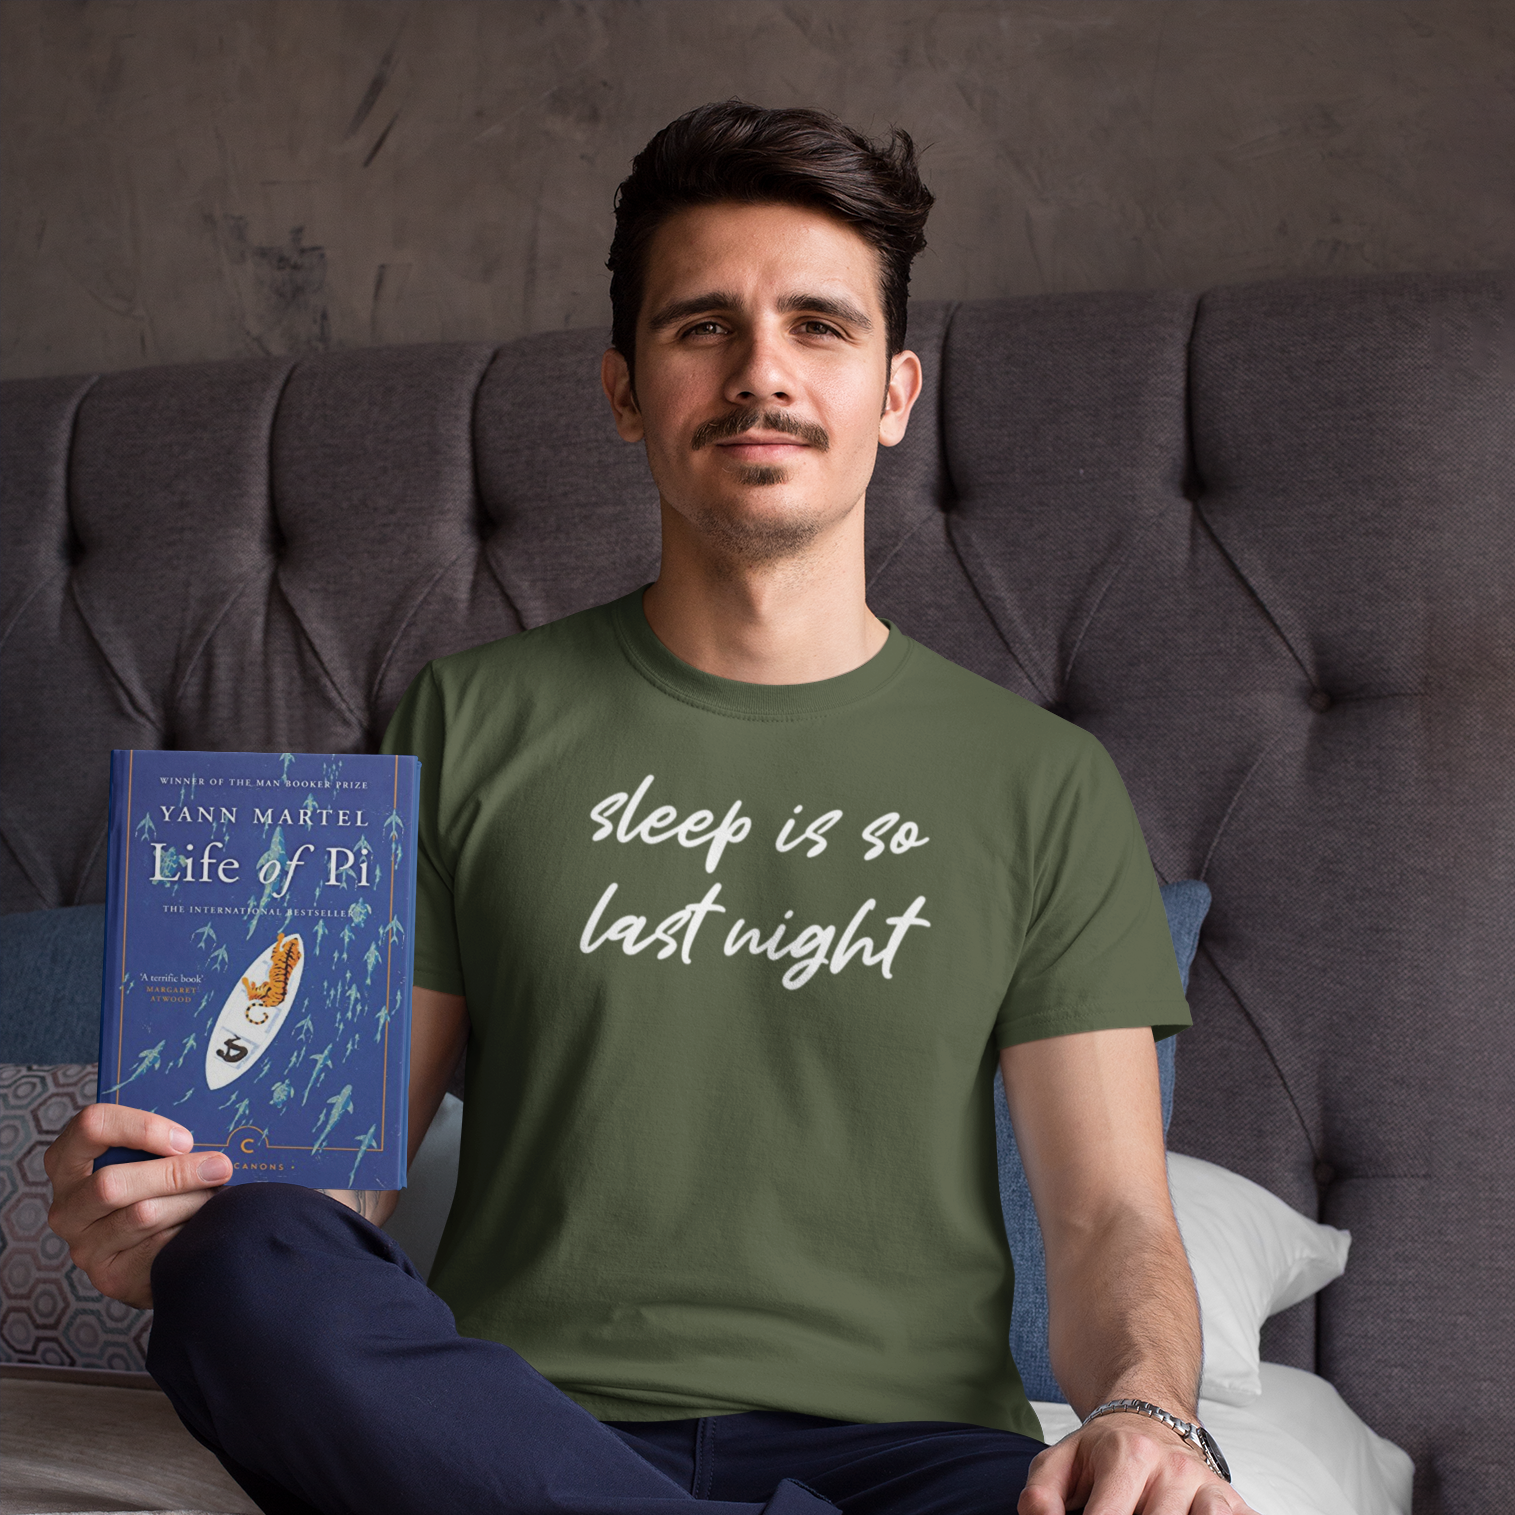 'Sleep is so last night' adult shirt